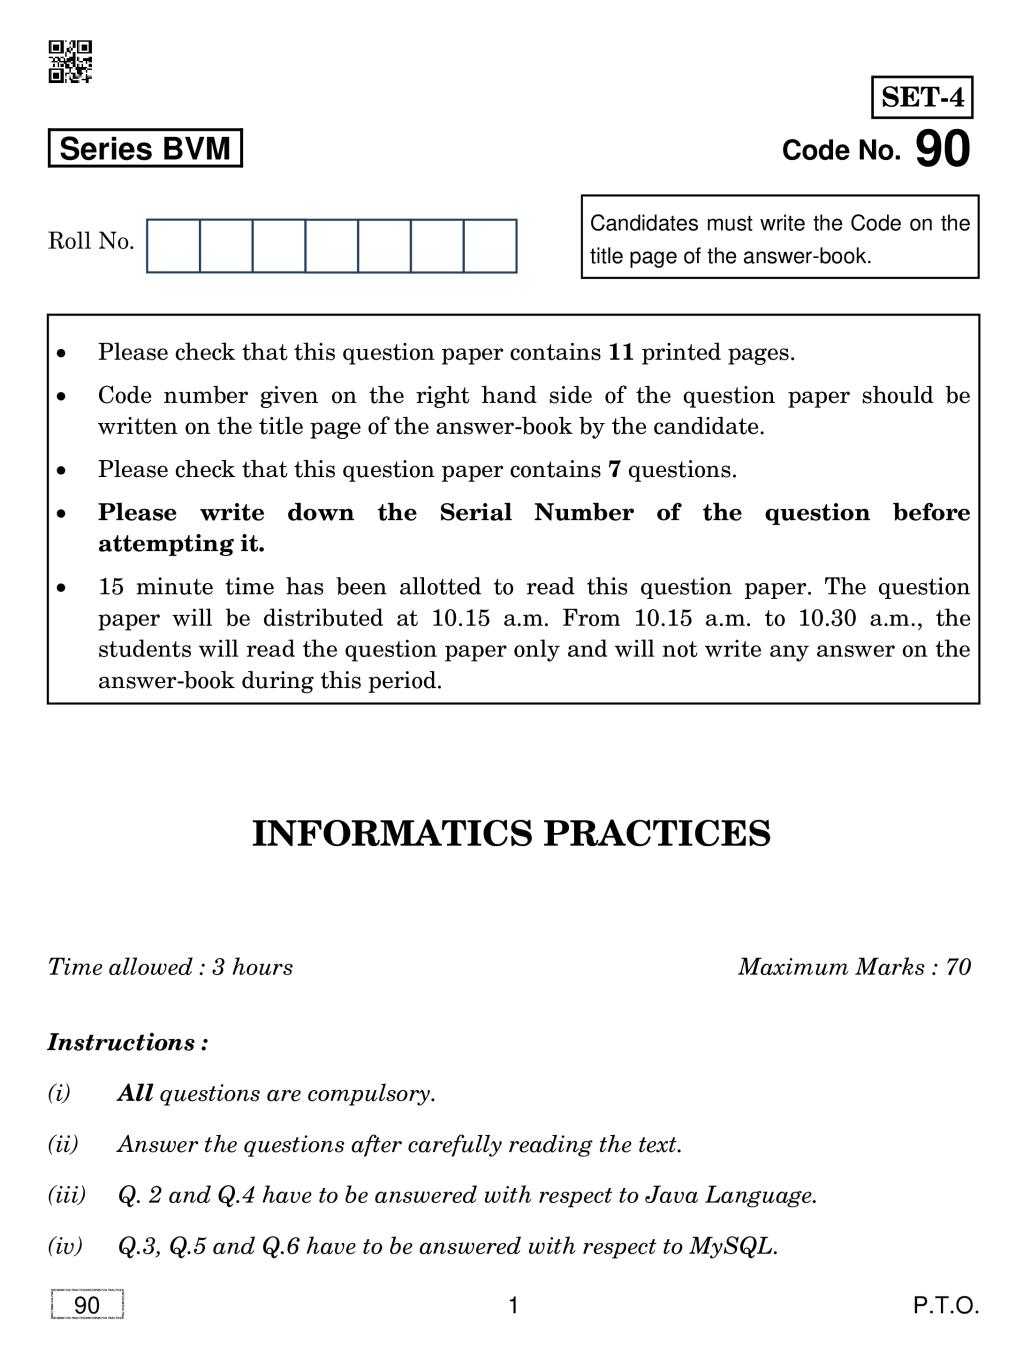 CBSE Class 12 Informatics Practices Question Paper 2019 - Page 1